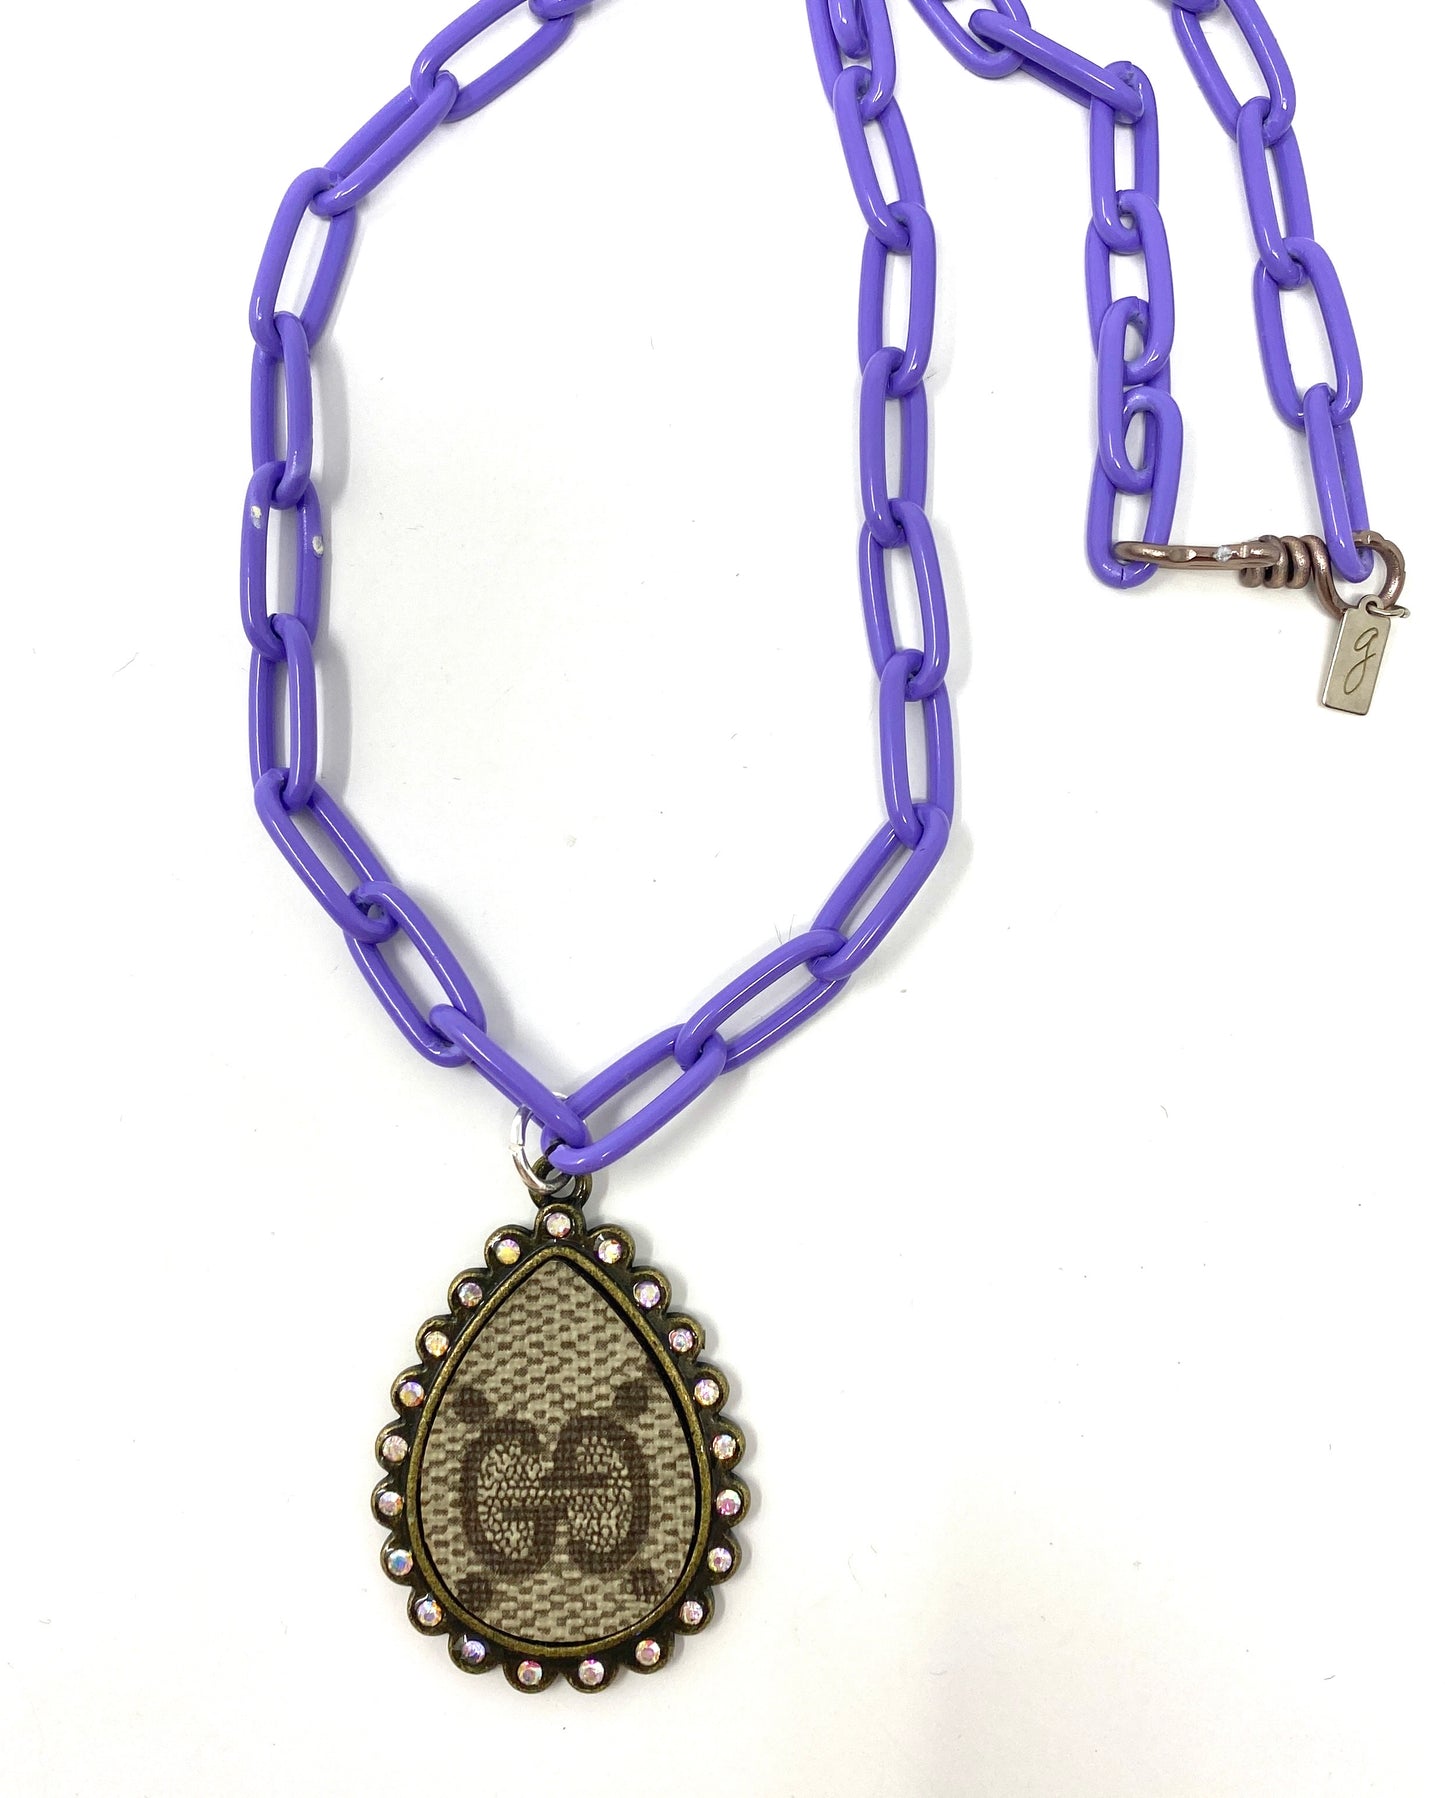 Purple Enamel Chain Necklace With Signature "GG" Pendant